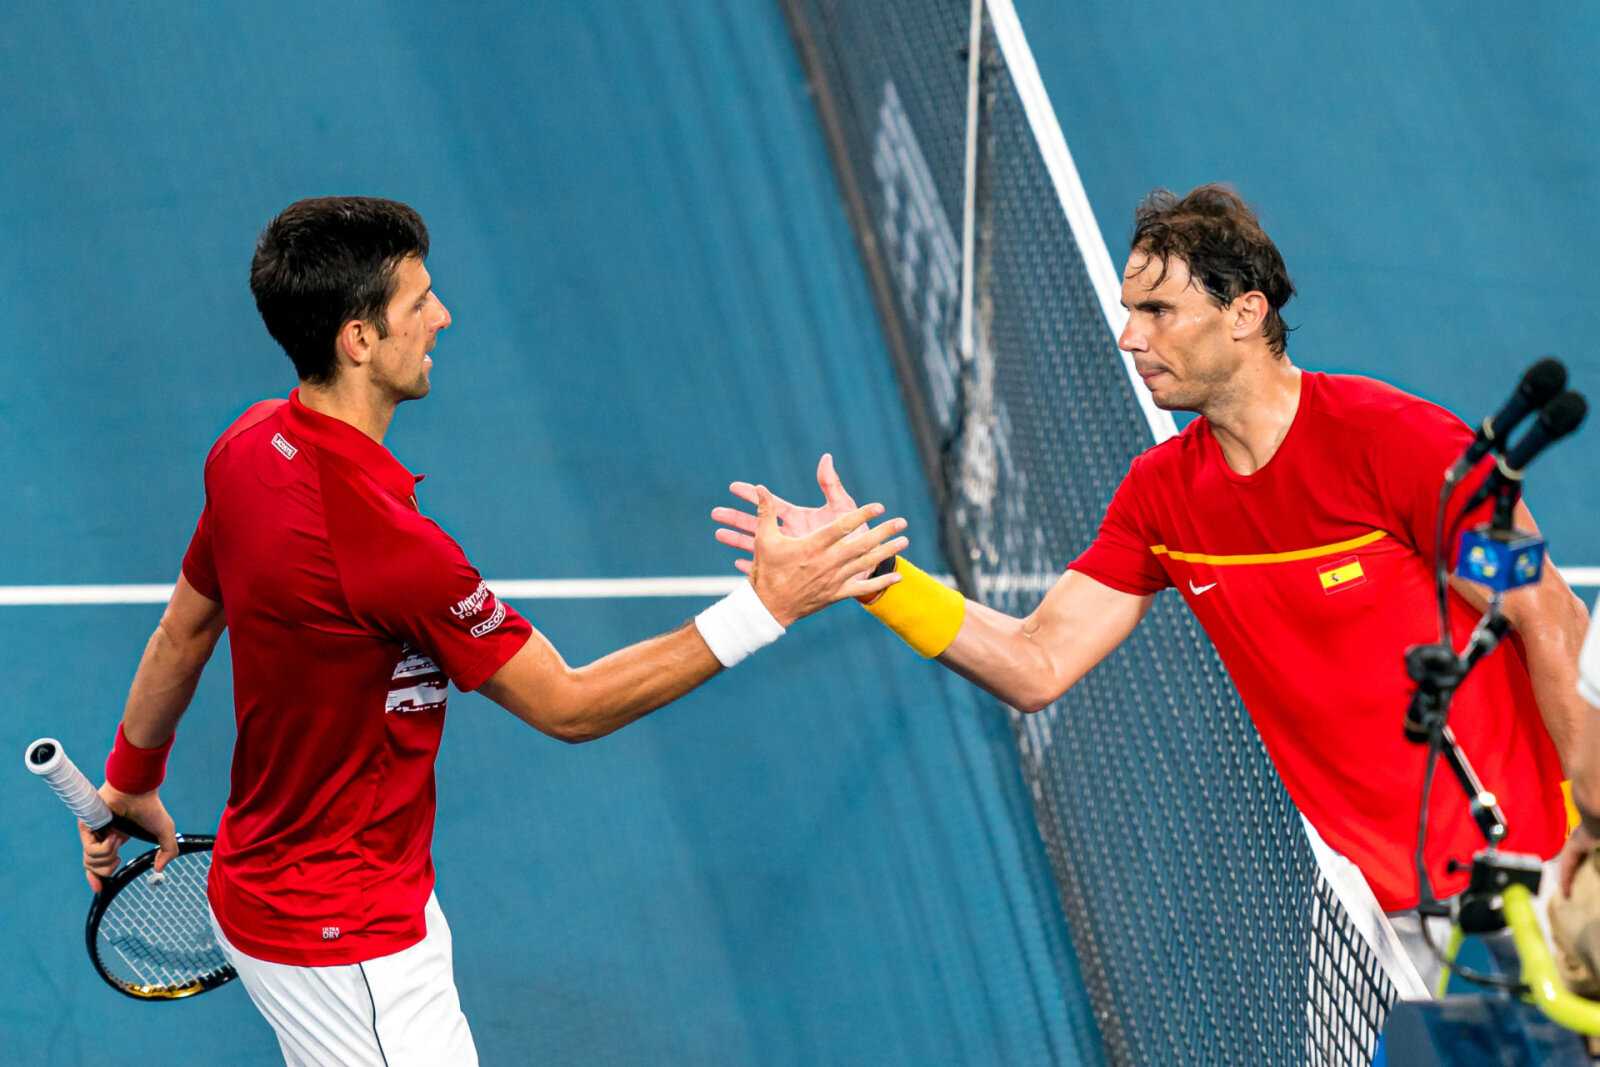 « Montrer une stabilité incroyable » : Rafael Nadal salue son rival Novak Djokovic pour la phénoménale saison 2021